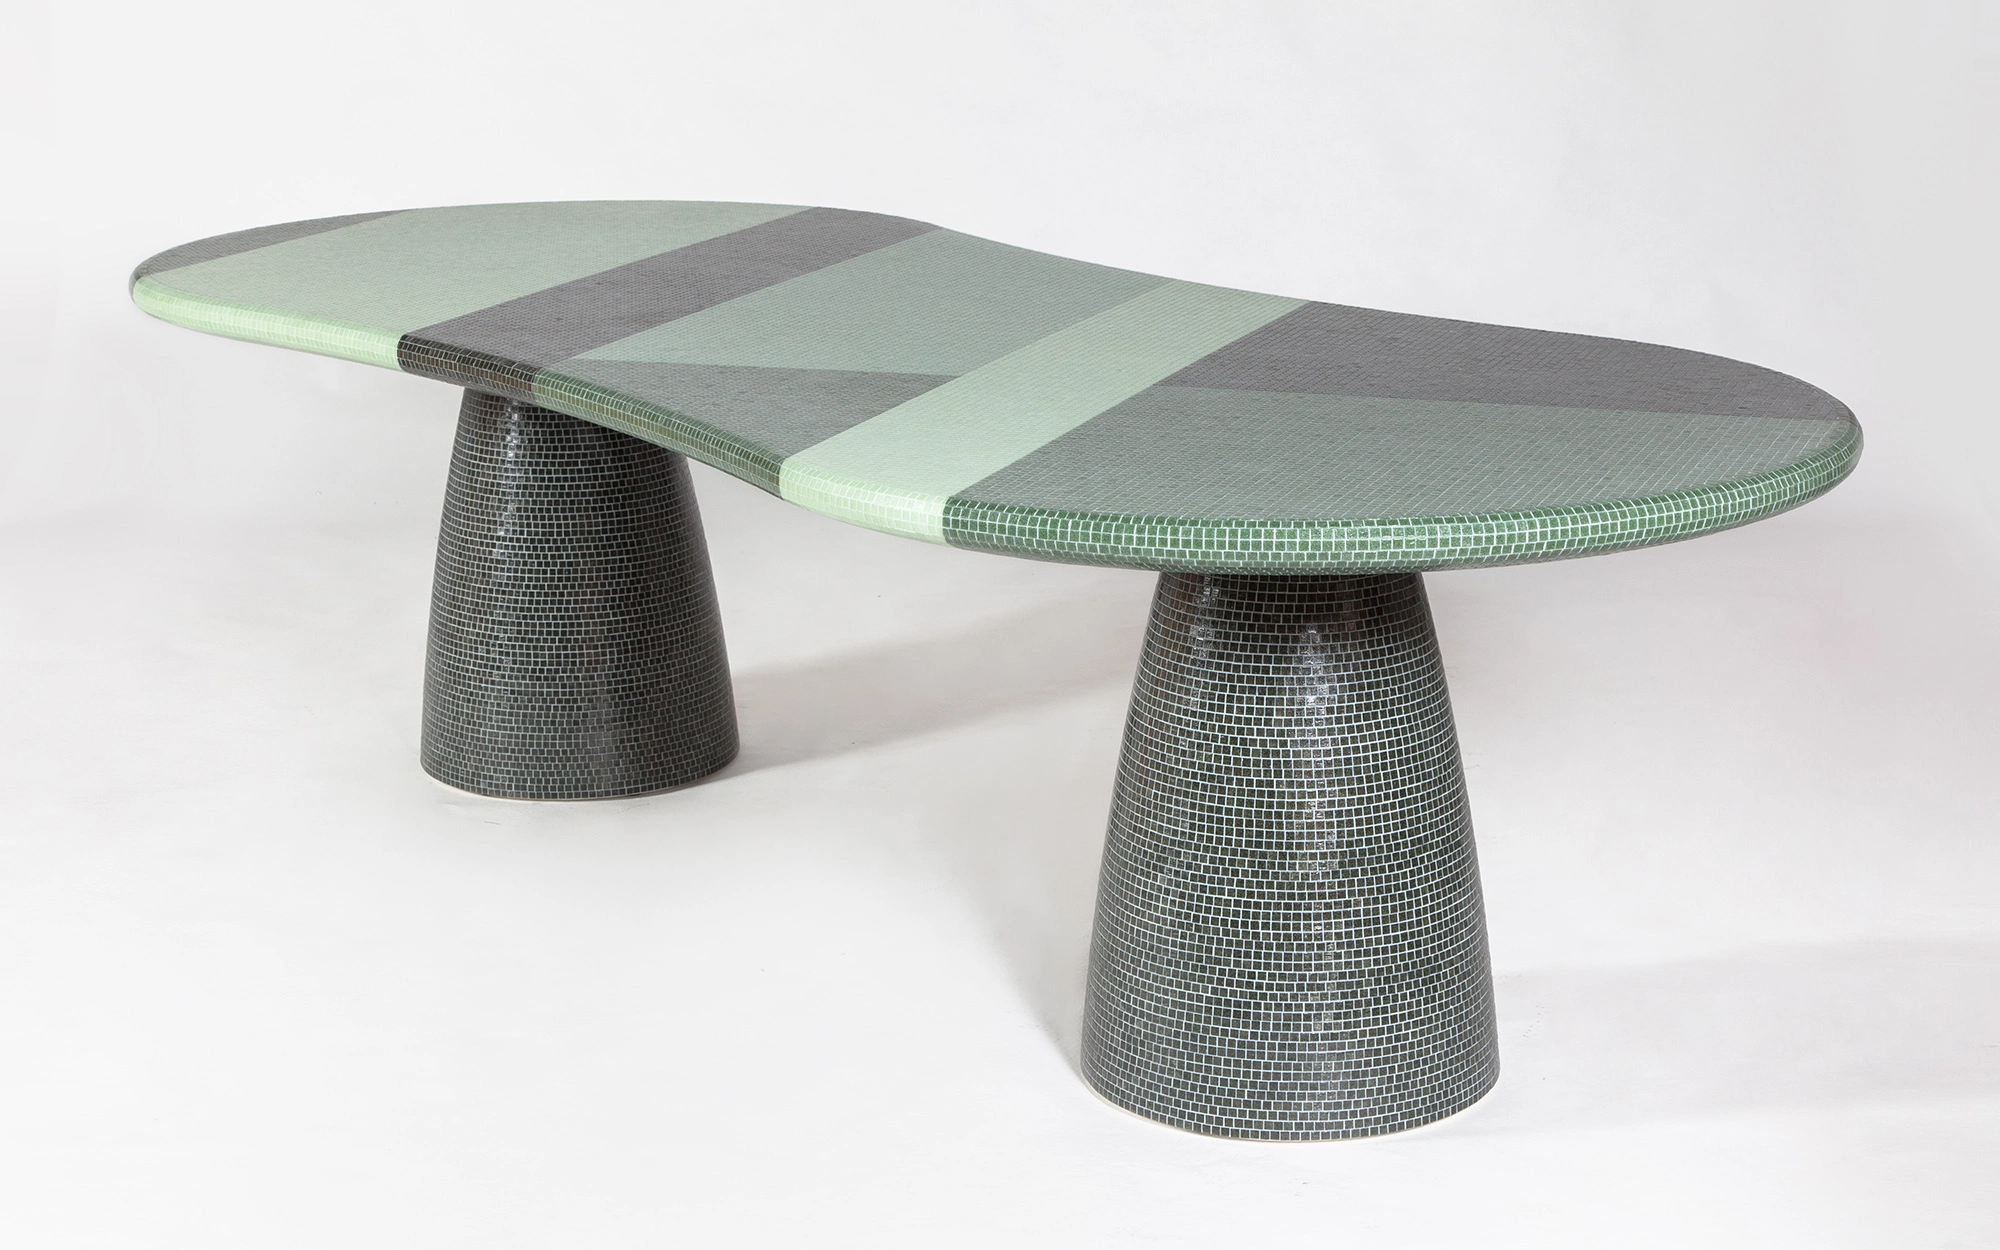 Umbria Dining Table - Alessandro Mendini - Floor light - Galerie kreo